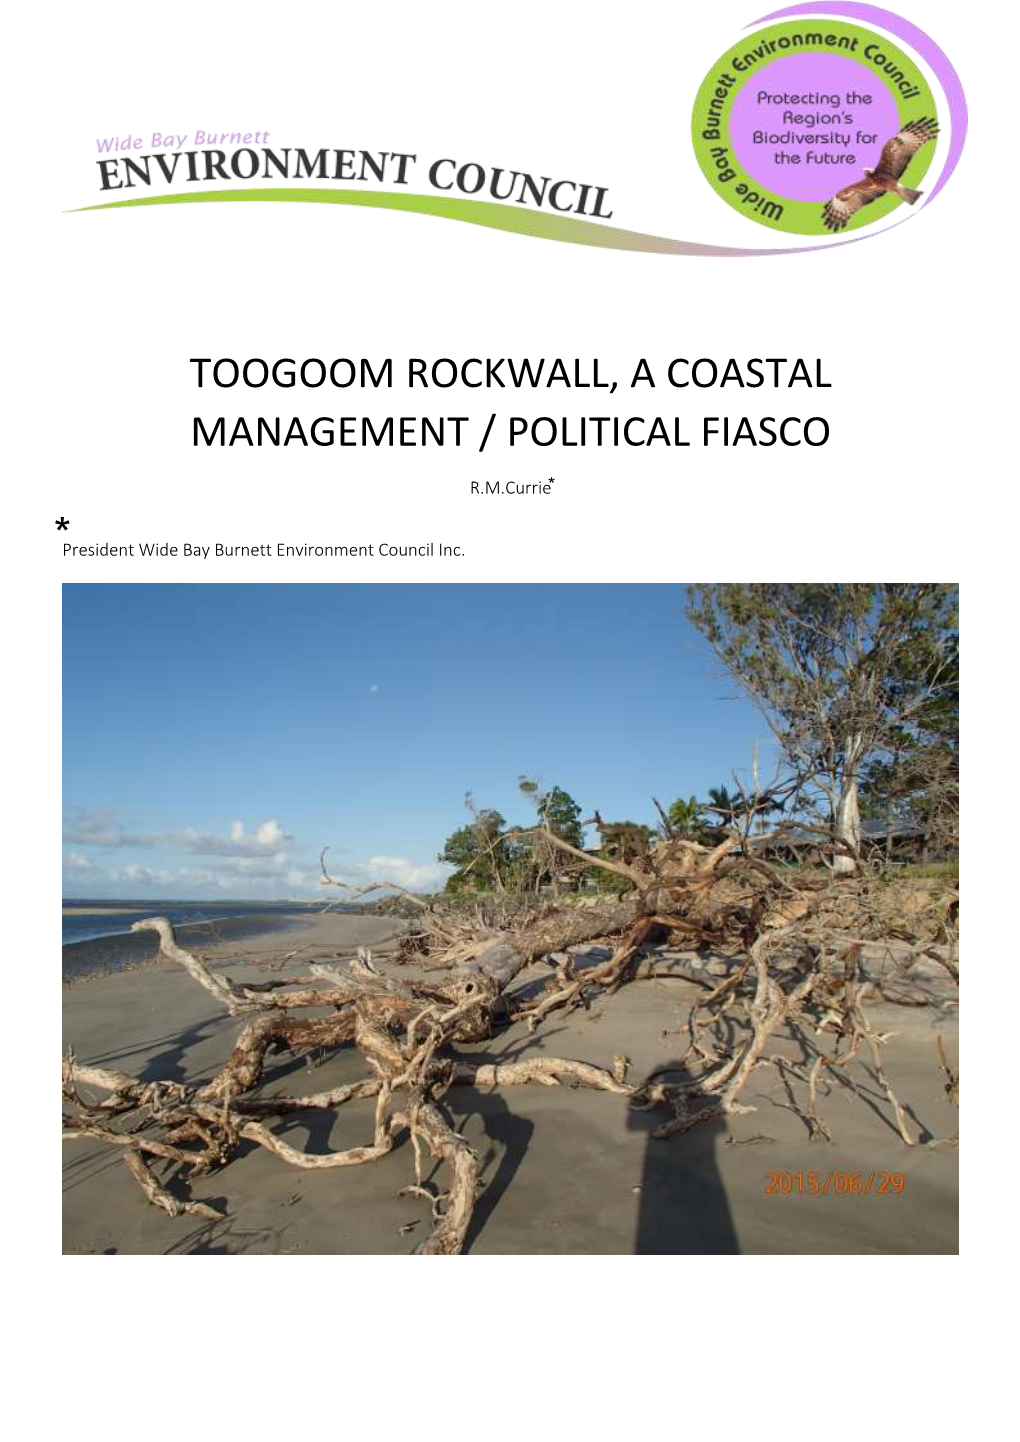 Toogoom Rockwall, a Coastal Management / Political Fiasco